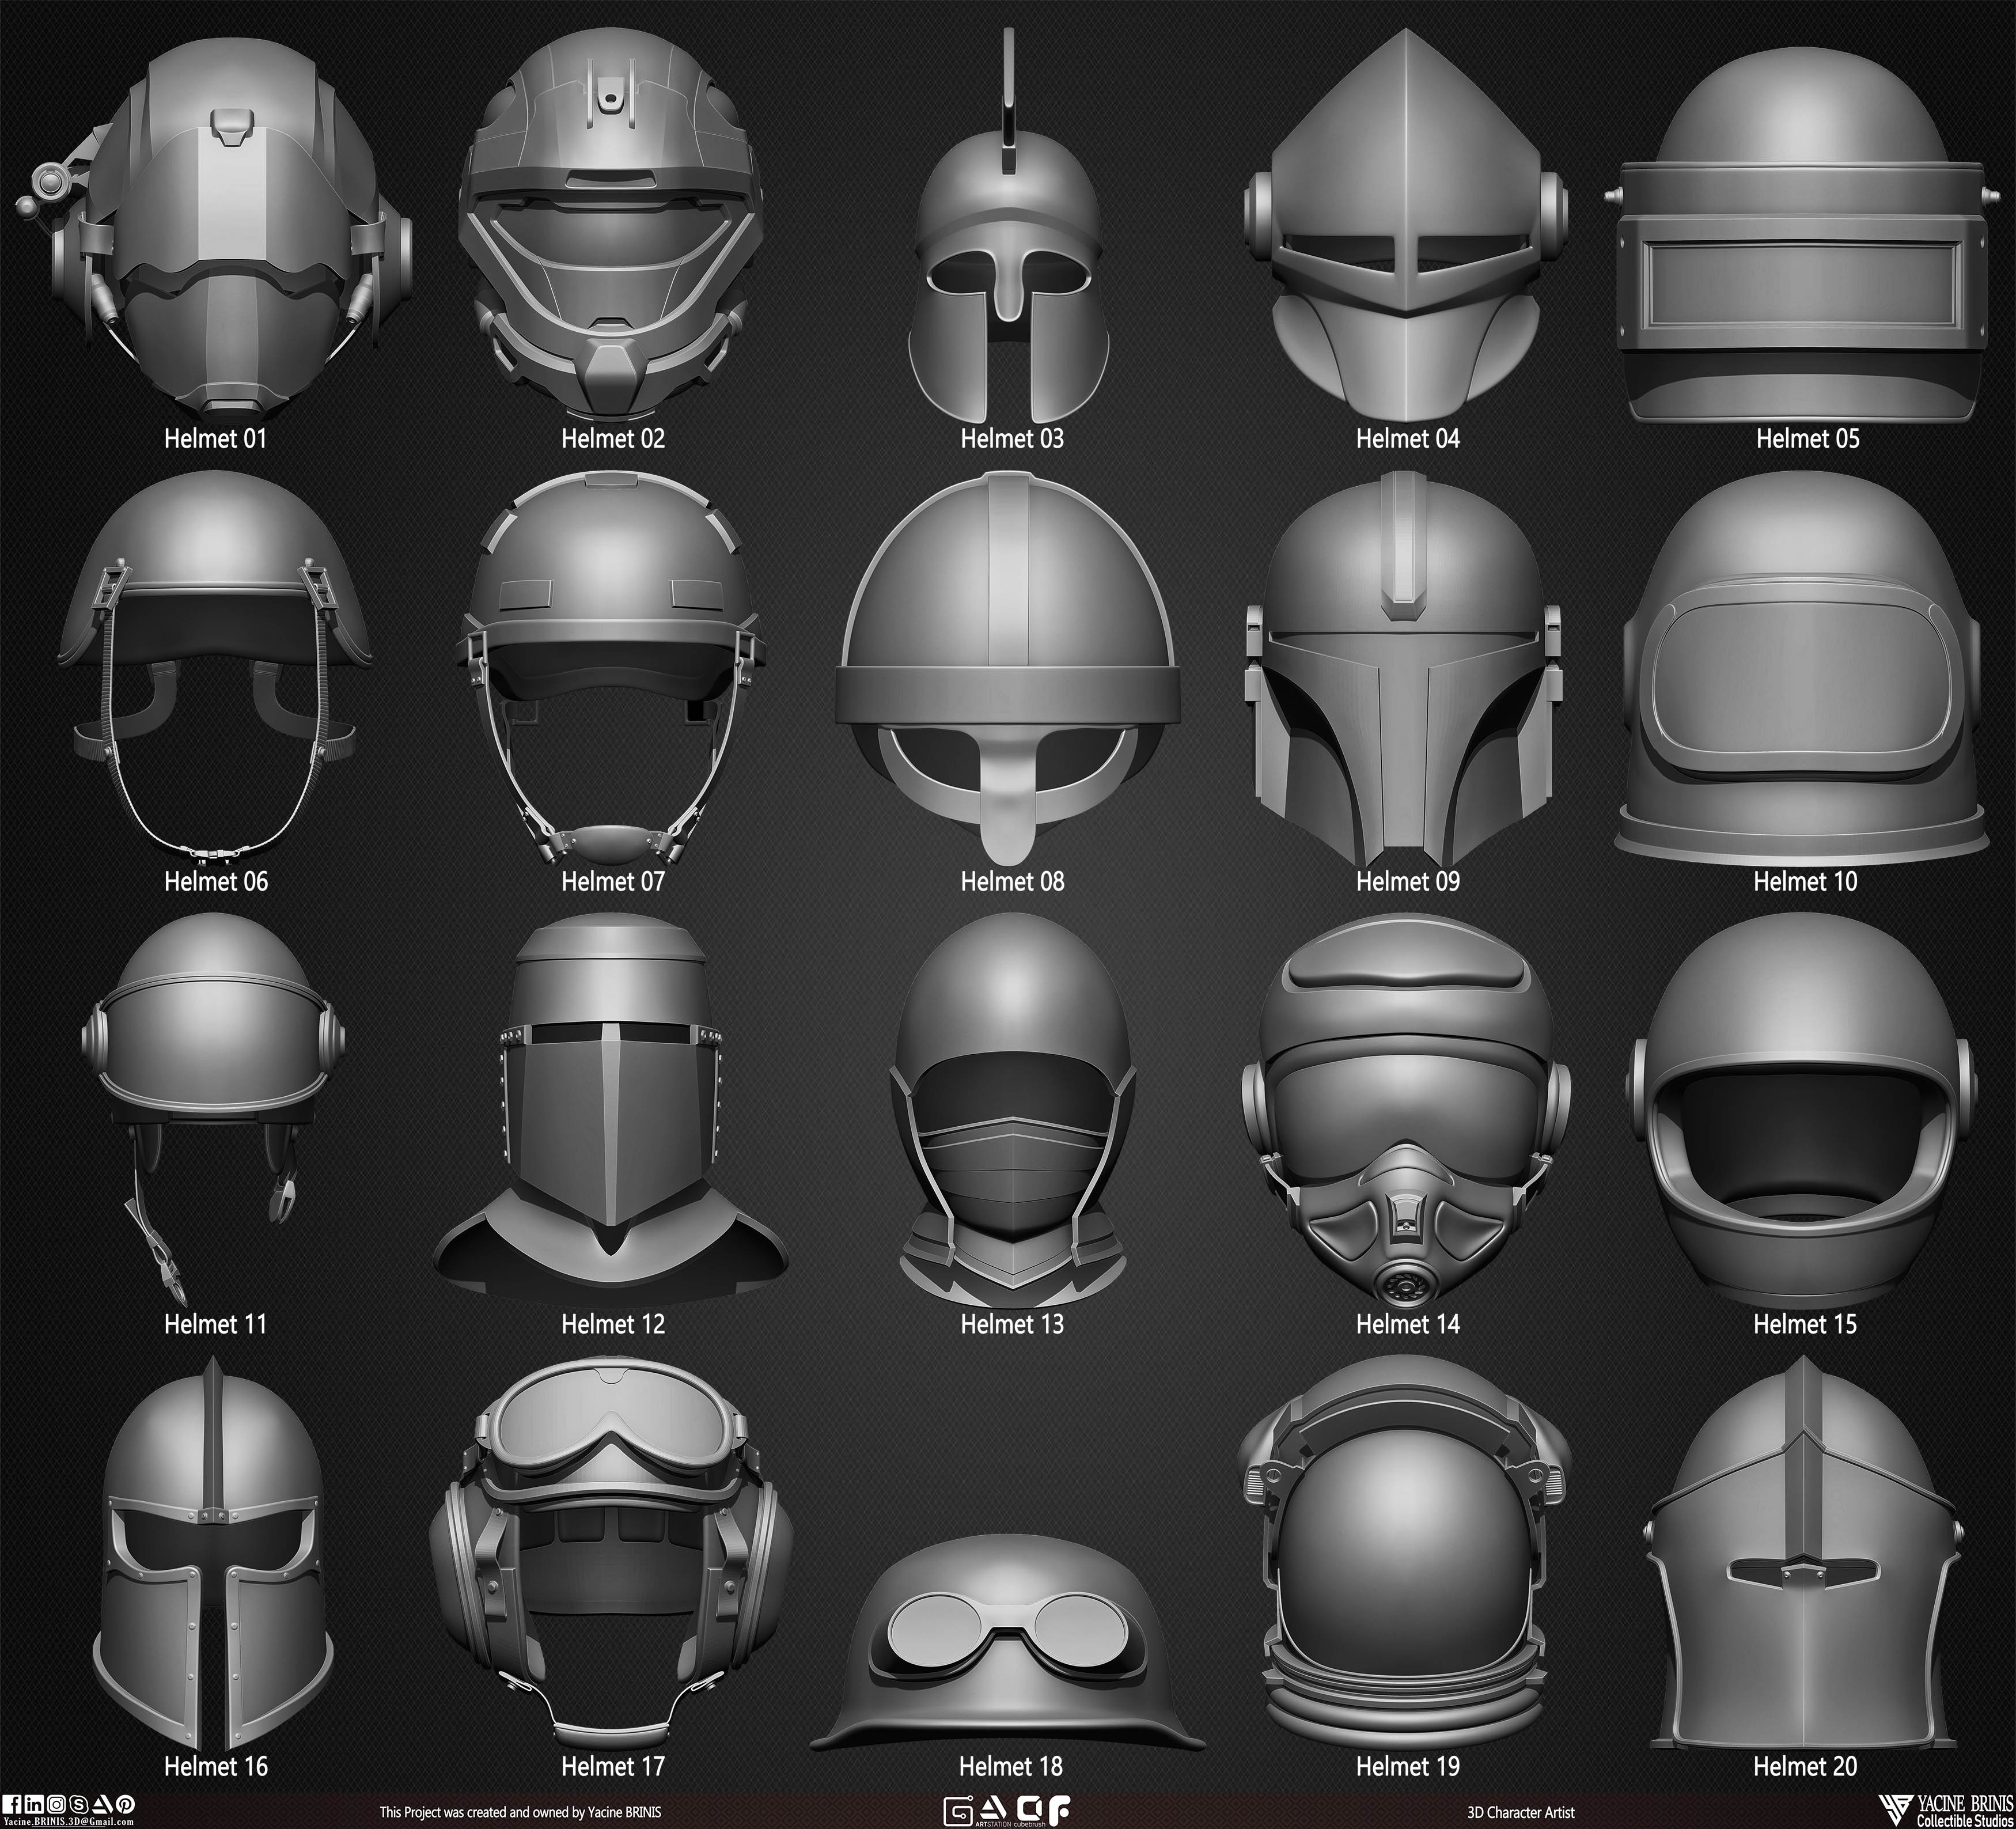 Pack of 20 Helmets Kitbash sculpted by Yacine BRINIS Vol 01 set 001